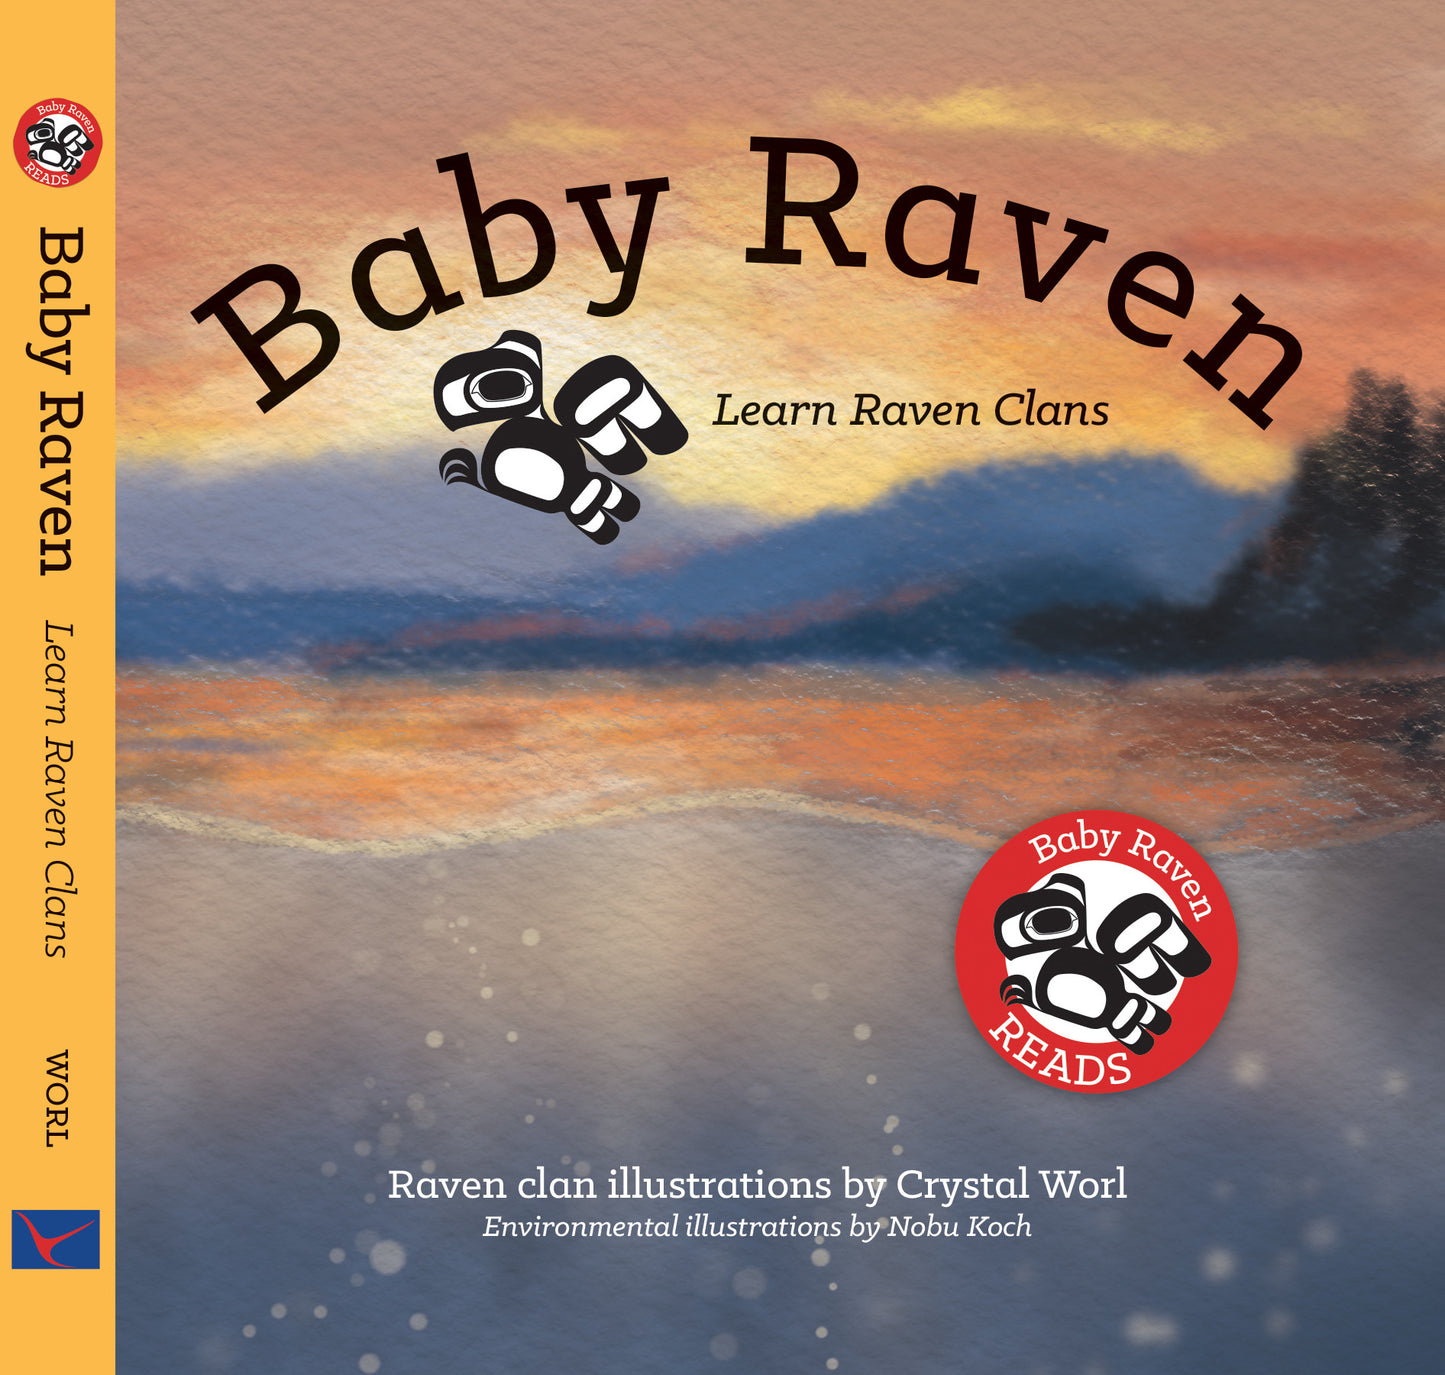 Book, BRR - “Baby Raven", Worl, Koch